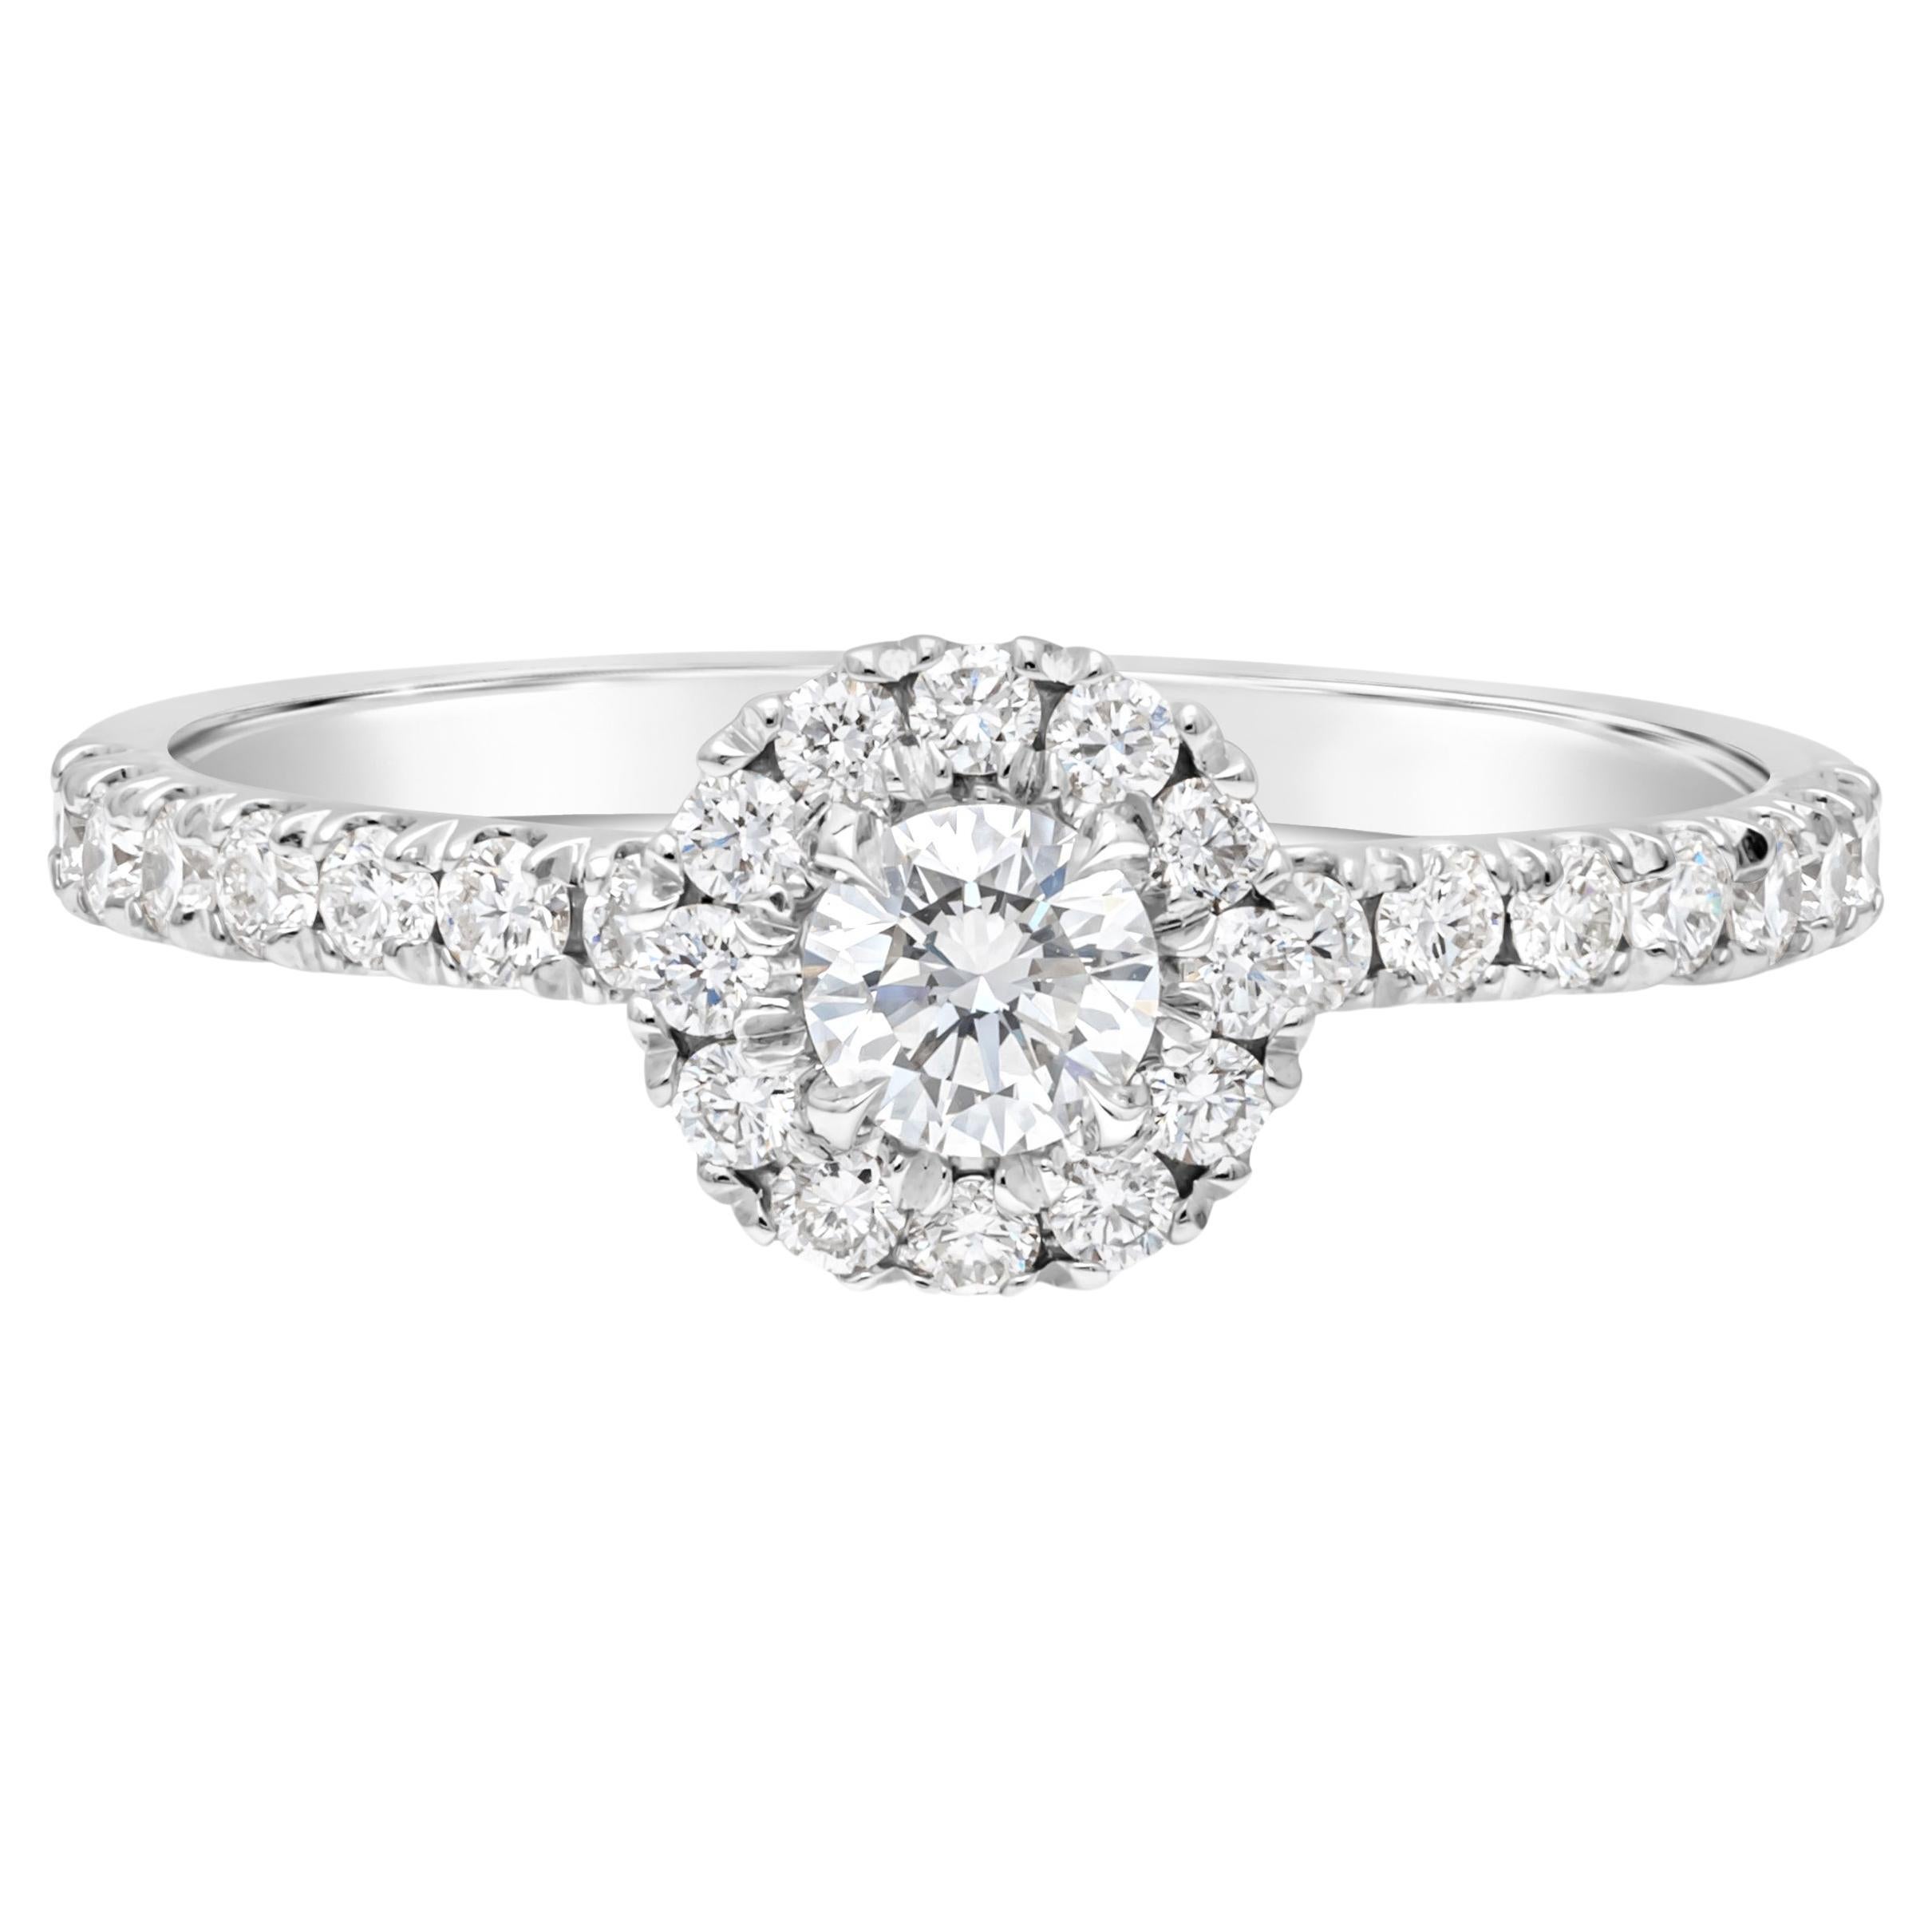 Roman Malakov GIA Certified 0.21 Carats Round Halo Diamond Pave Engagement Ring